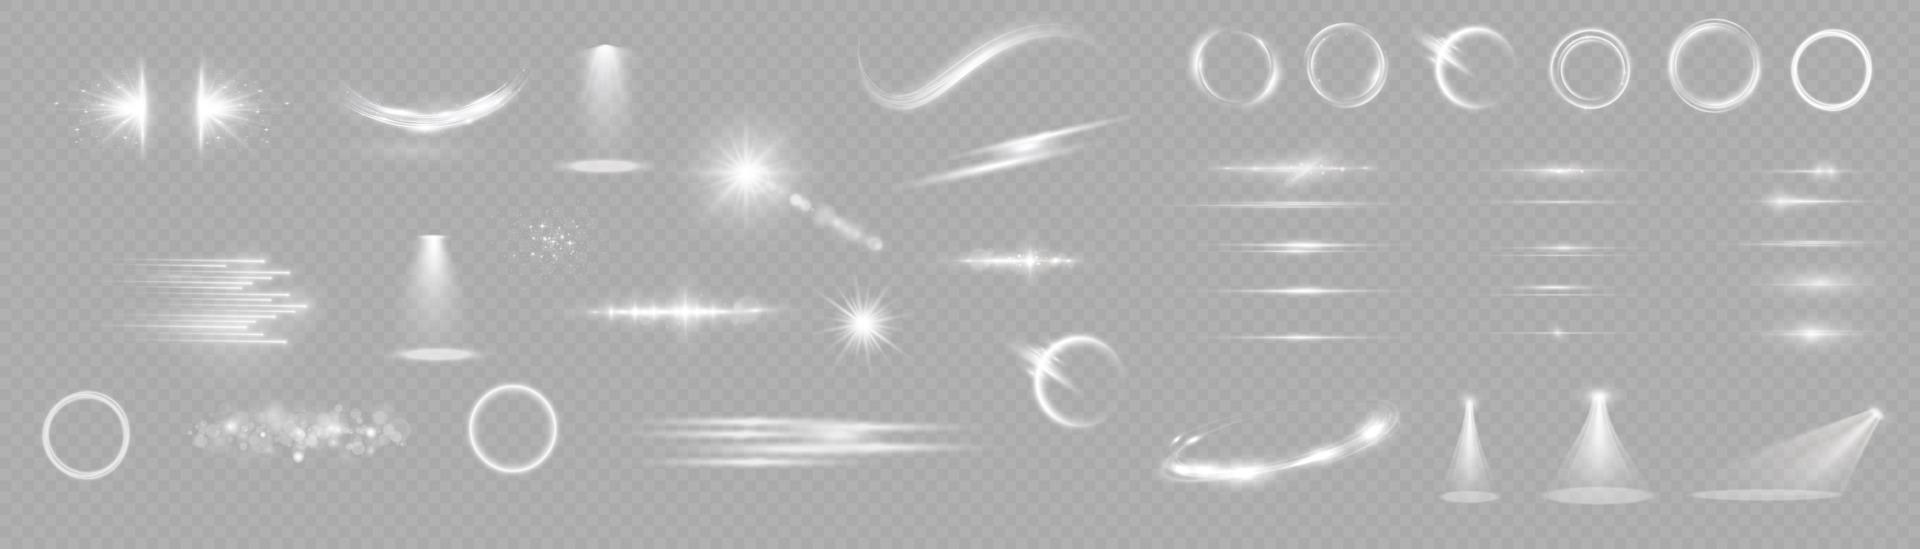 luz solar, efeito especial abstrato. conjunto de efeito de luz. brilho isolado conjunto de efeito de luz branca. reflexo de lente, explosão, brilho, poeira, linha, flash de sol, faísca e estrelas, holofotes, giro de curva. vetor